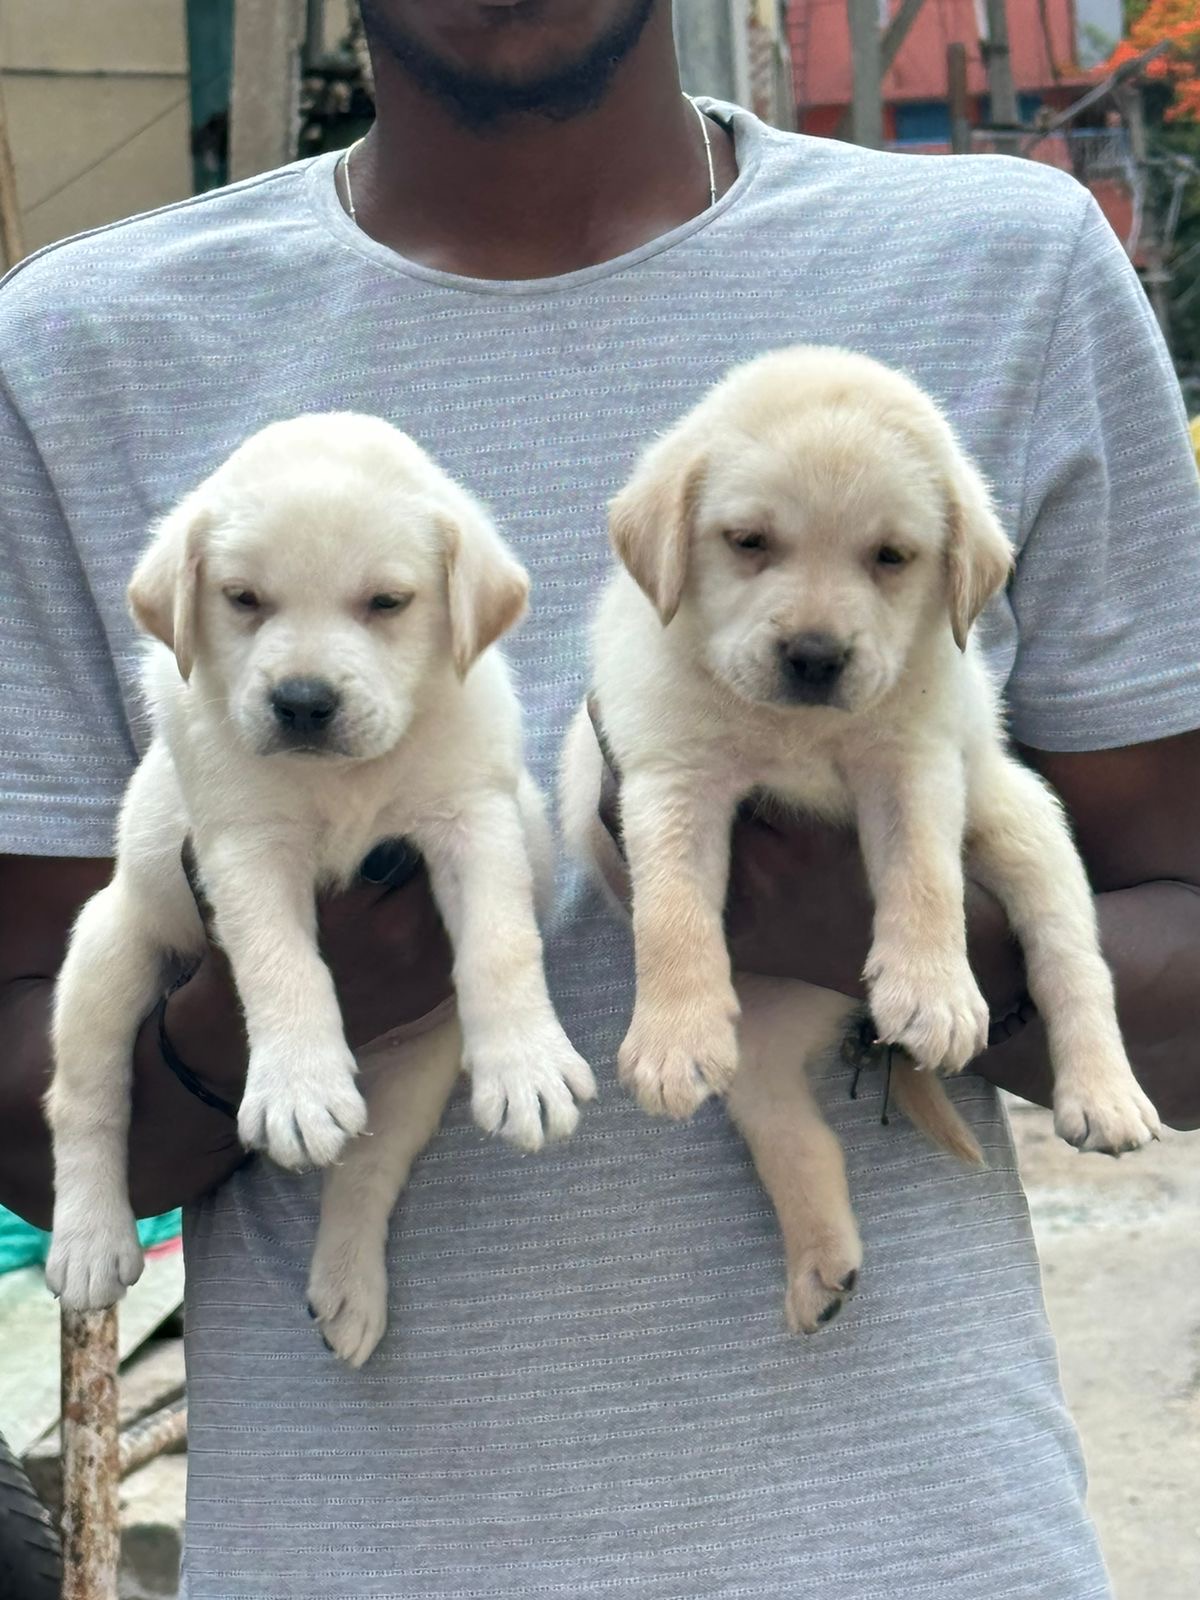 Labrador puppies from Bangalore. Breeder: shekar